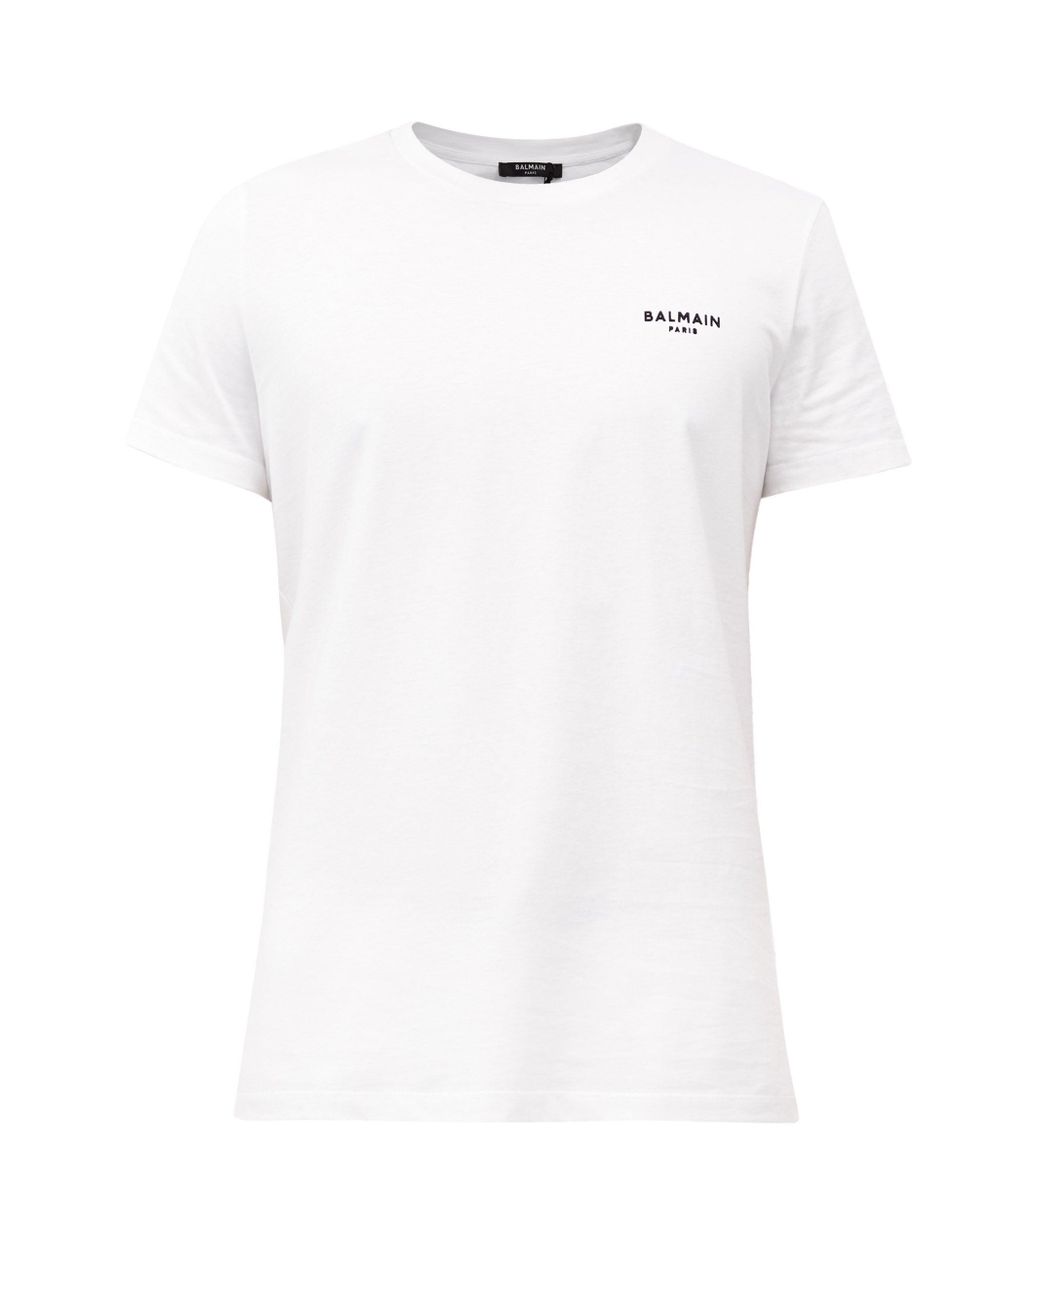 Balmain Flocked-logo Cotton-jersey T-shirt in White for Men - Lyst